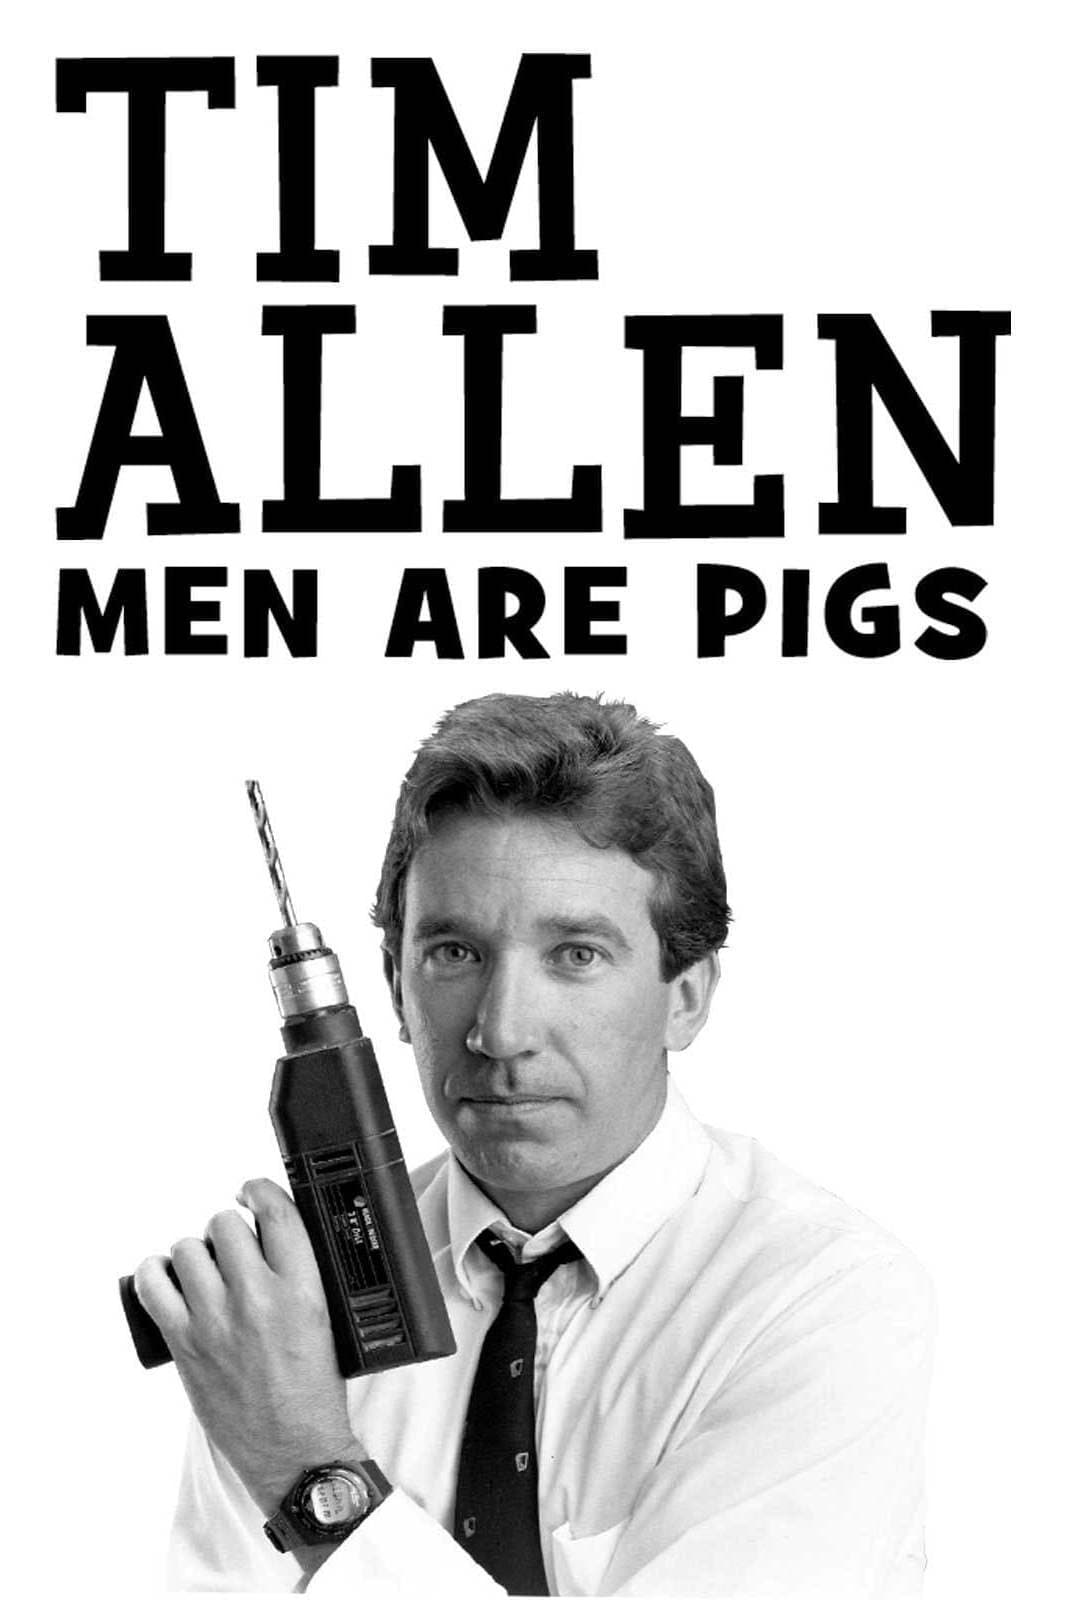 Tim Allen: Men Are Pigs (1990)